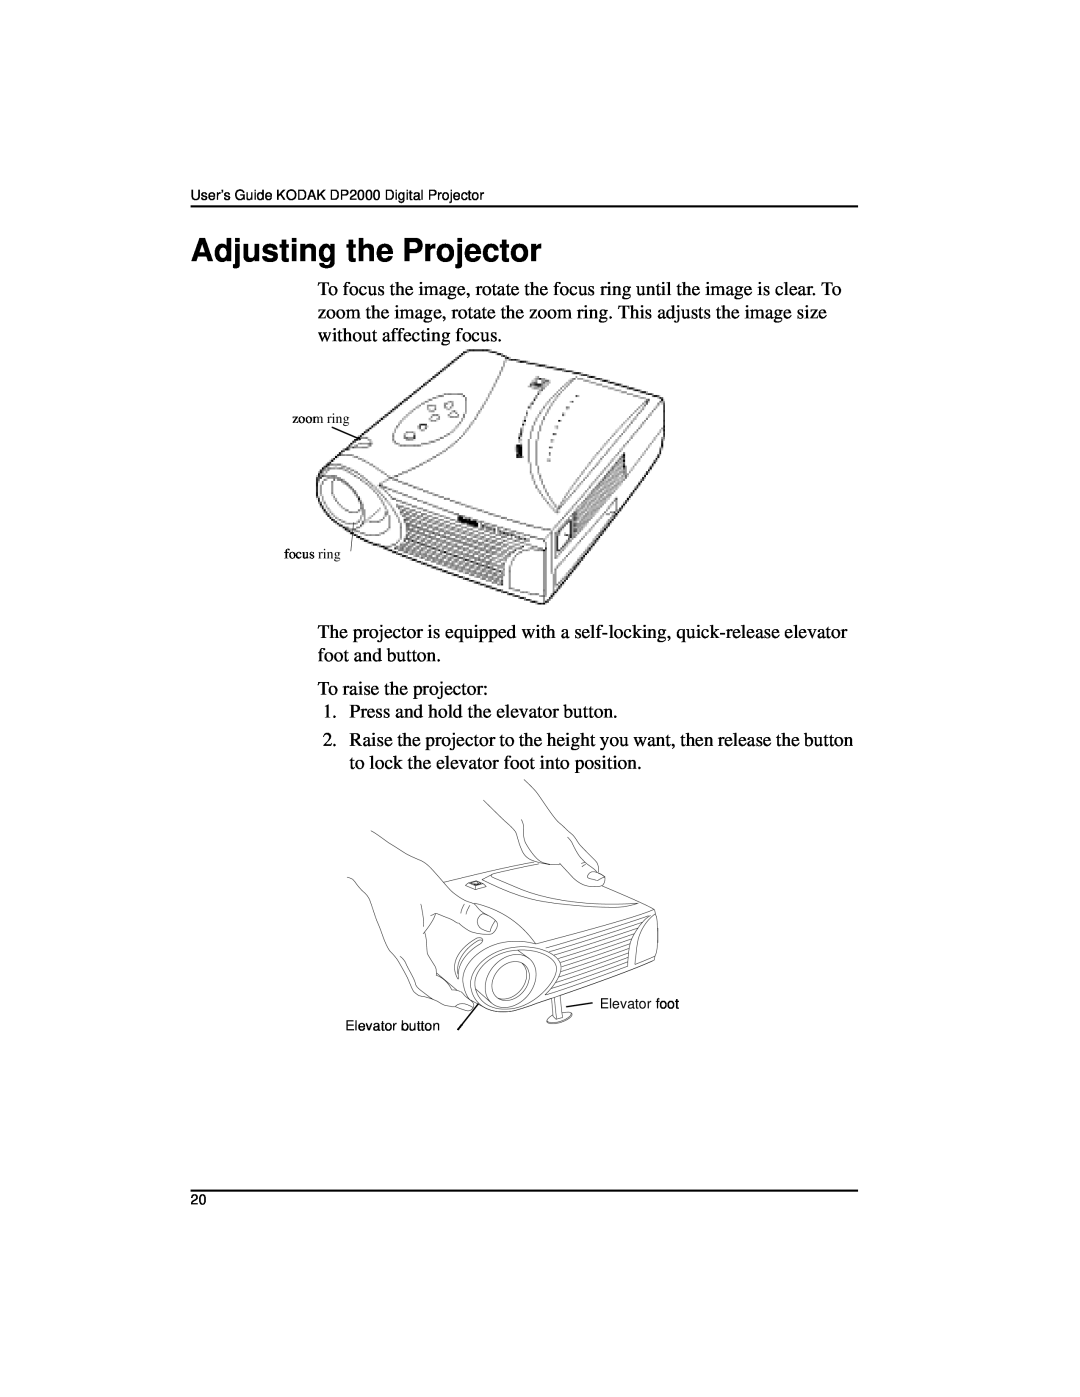 Kodak DP2000 manual Adjusting the Projector 